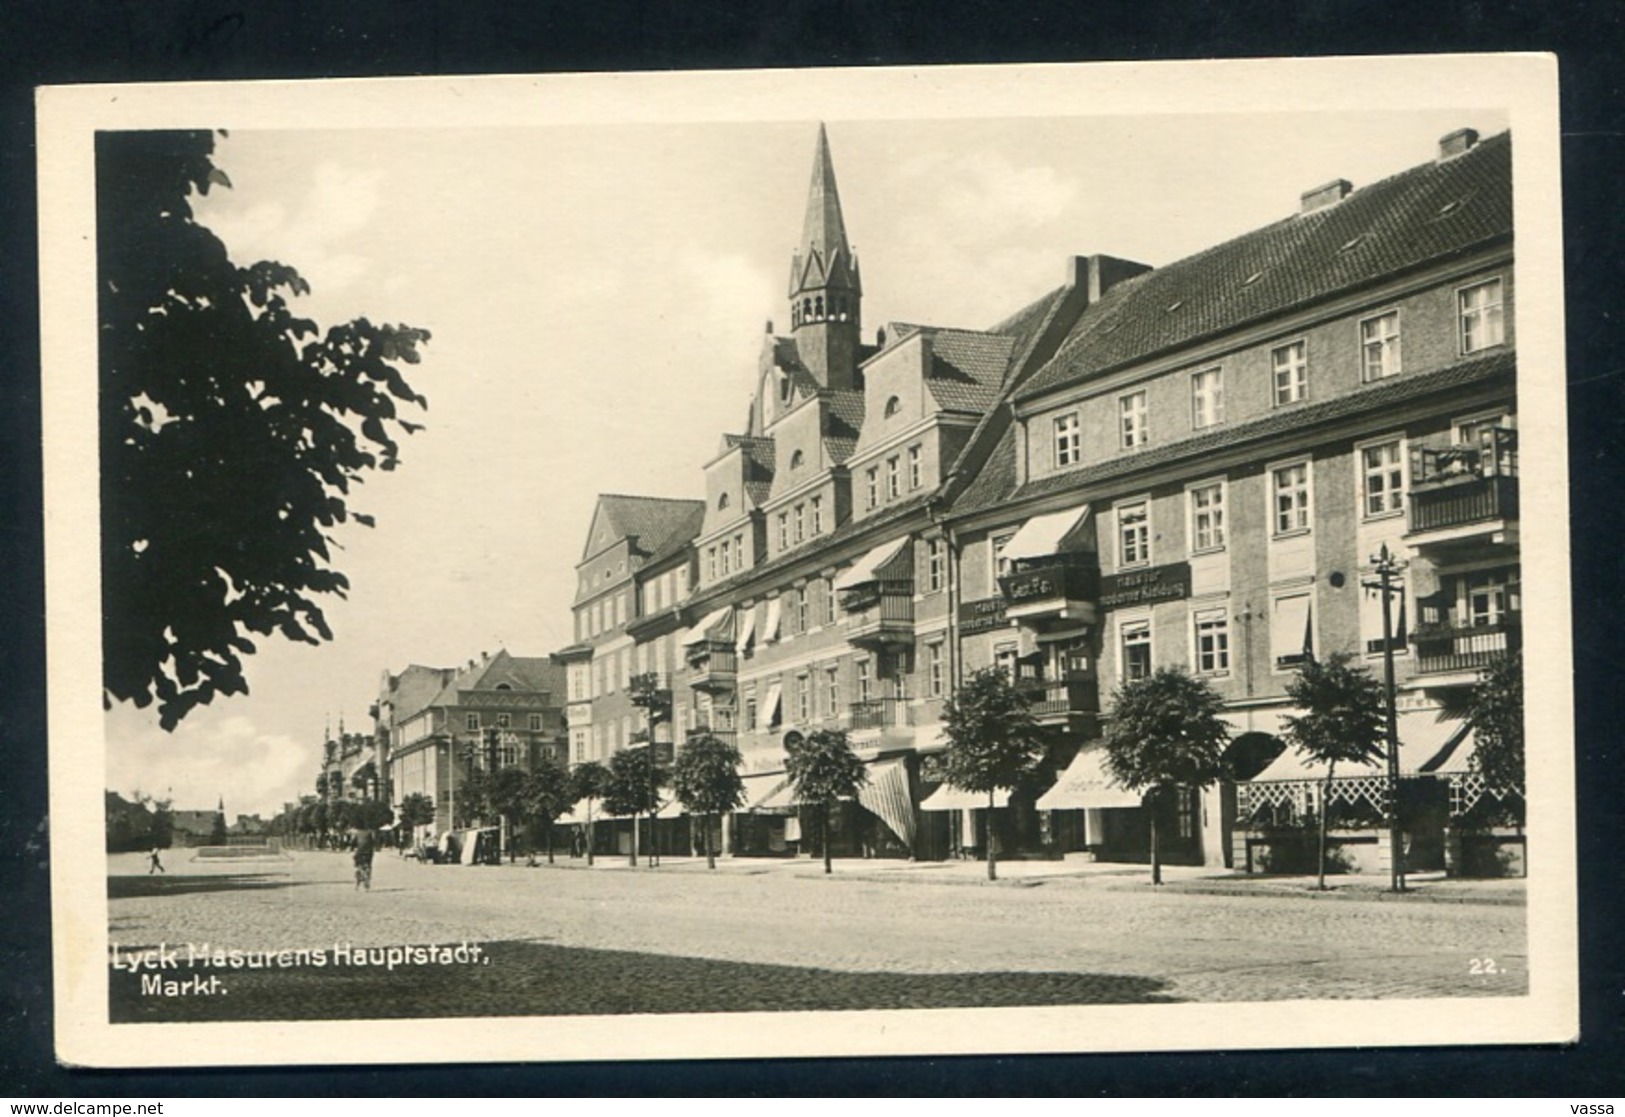 1941 - LYCK ( Ełk ) - Hauptstadt - Markt - MASURENS . Germany , Polen. Poland - Pologne